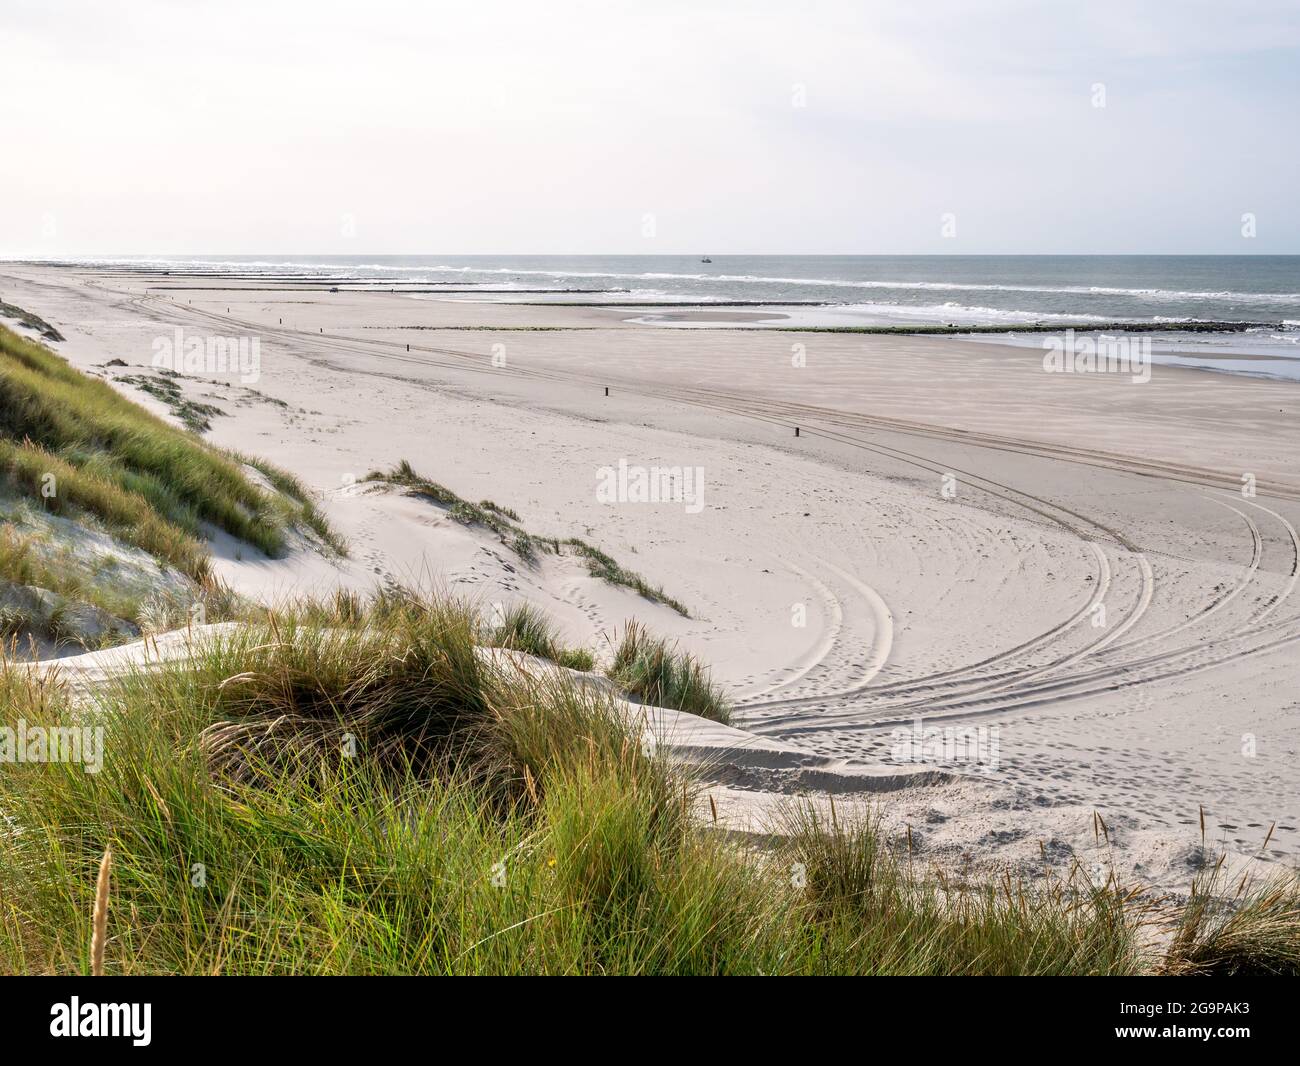 Beach with tire tracks and dunes at North Sea coast of West Frisian island Vlieland, Friesland, Netherlands Stock Photo